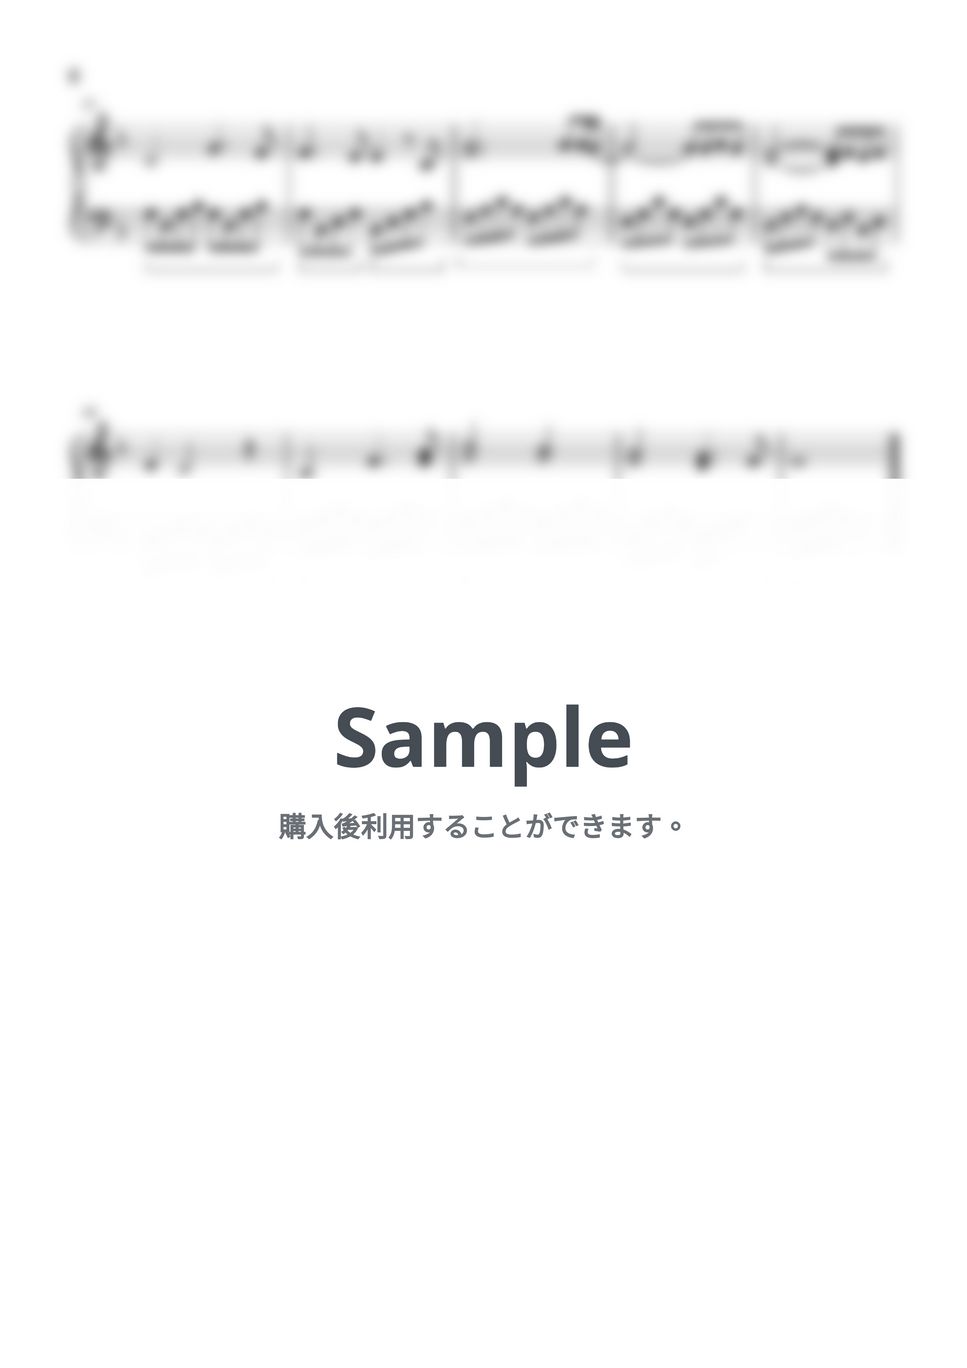 Believe (簡単楽譜) by ピアノ塾